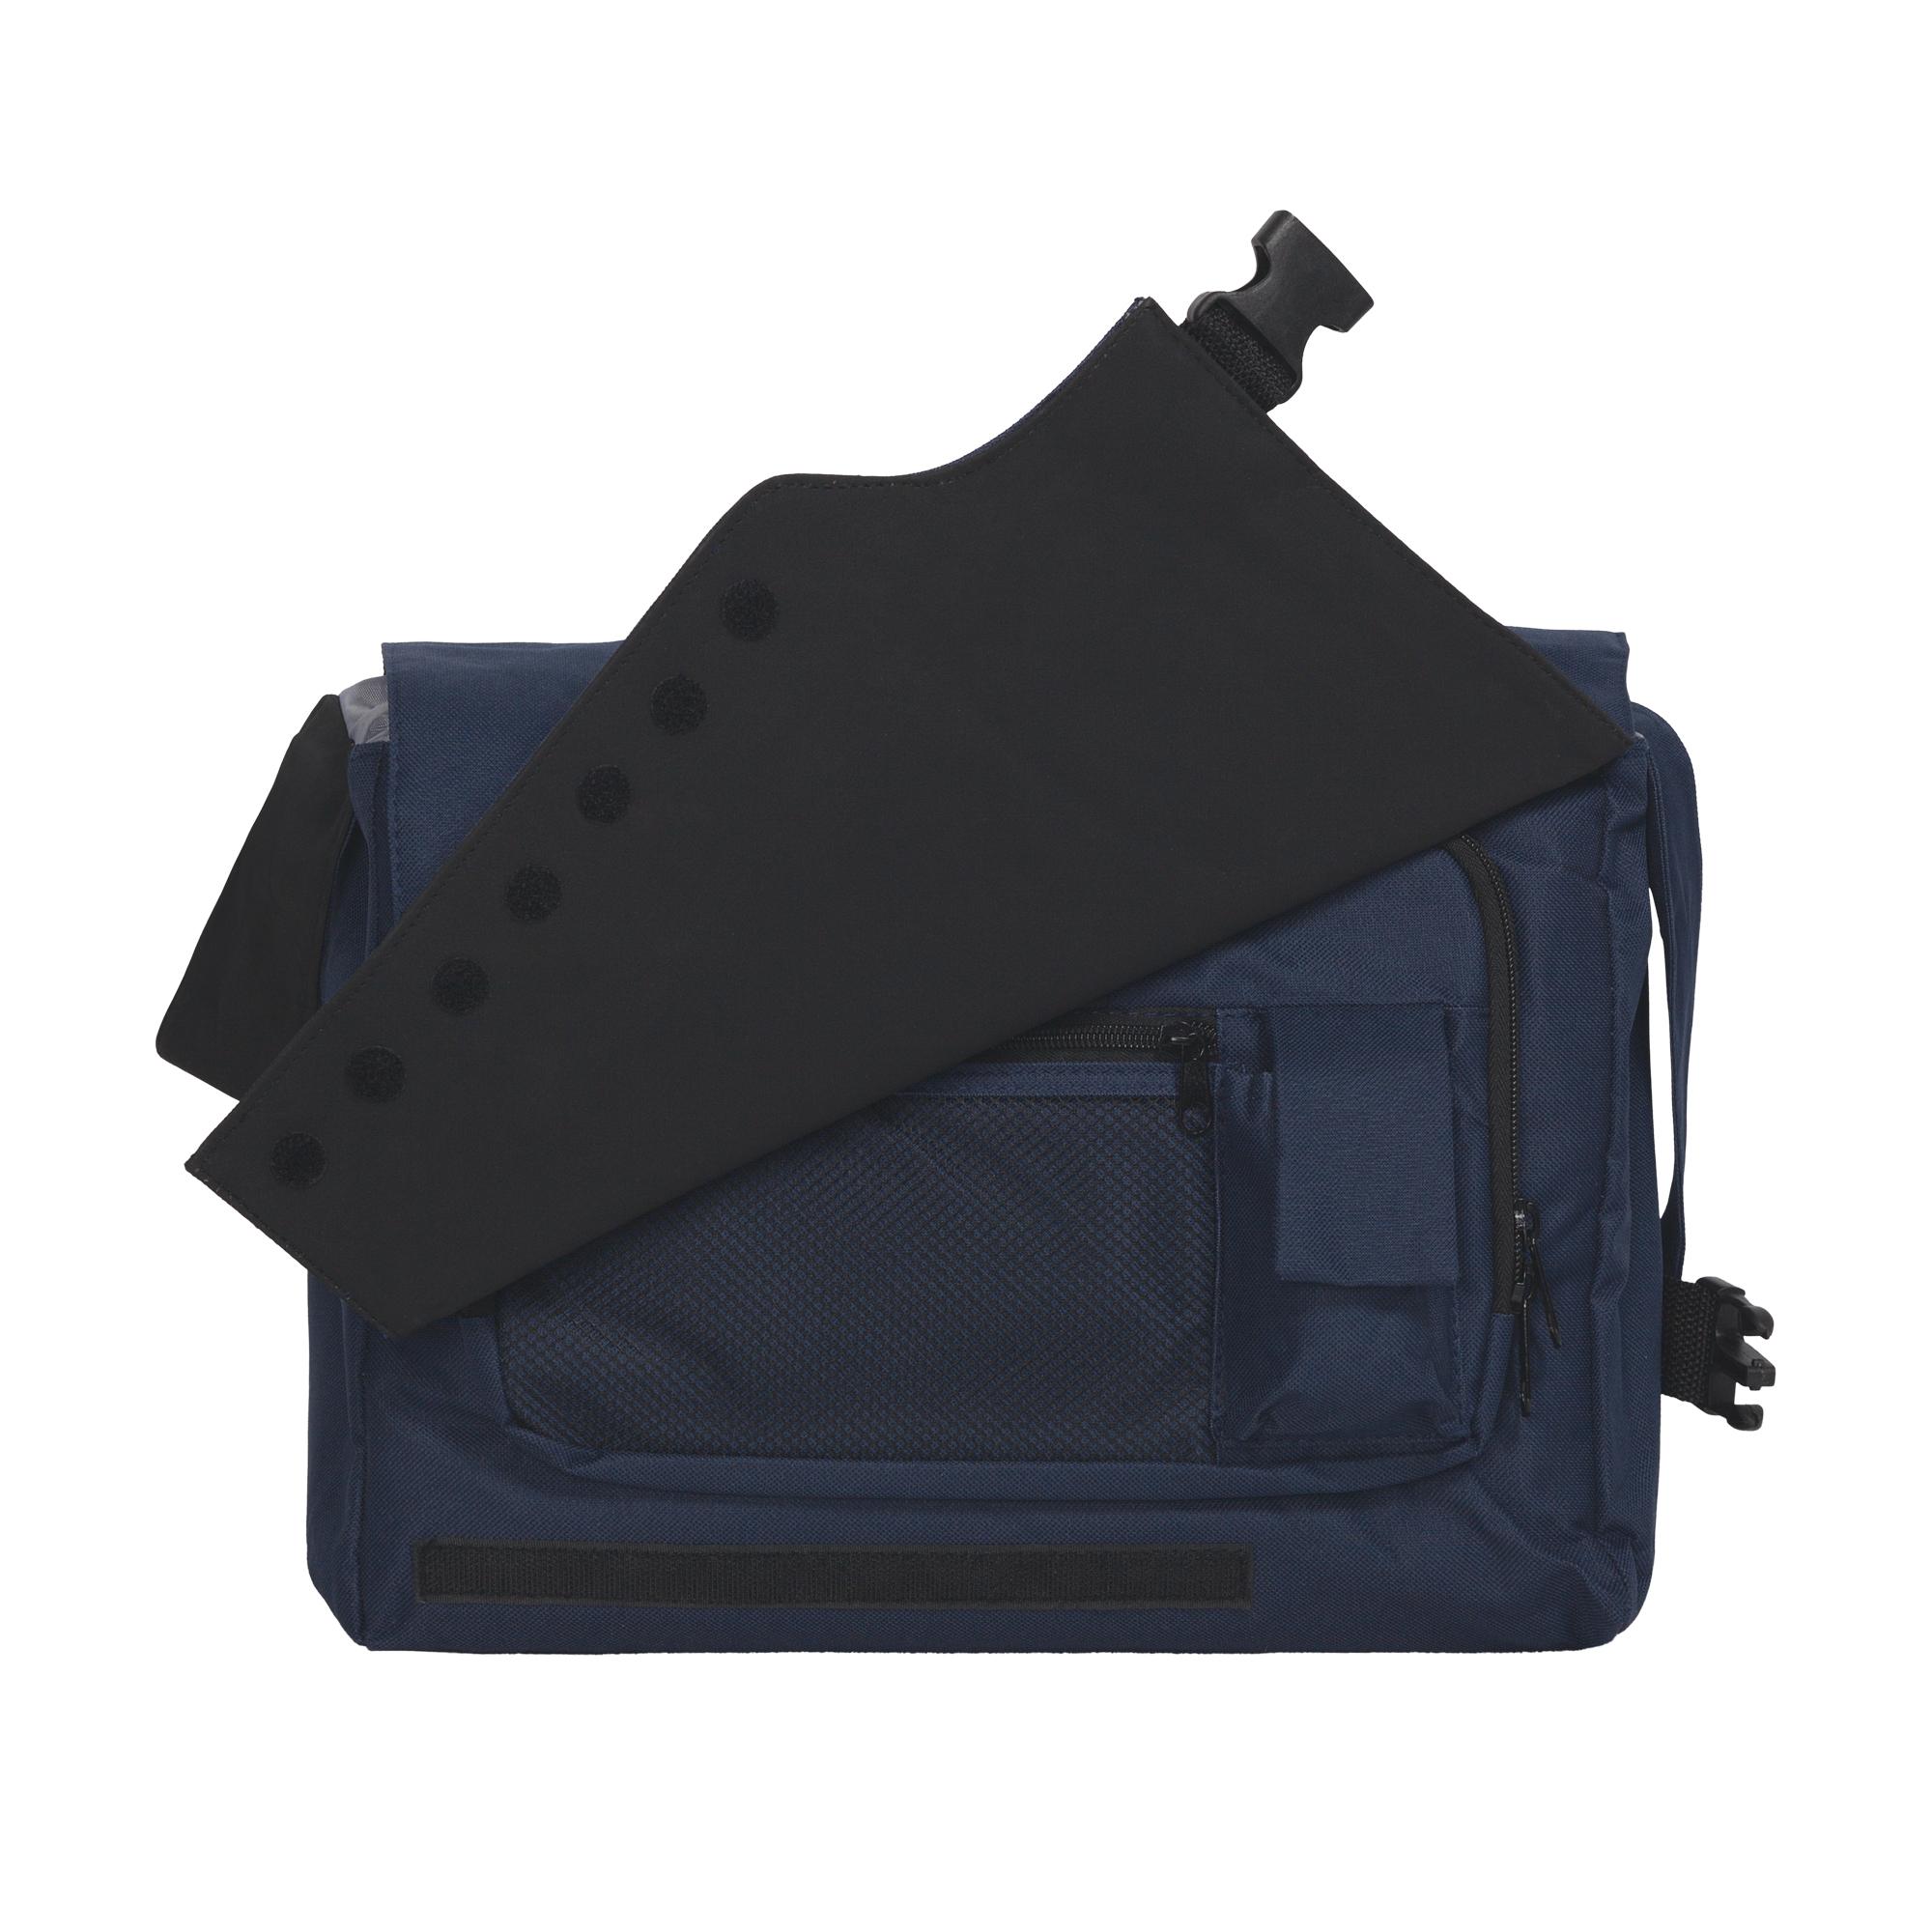 Сумка для ноутбука "iBag", цвет темно-синий, фото 2